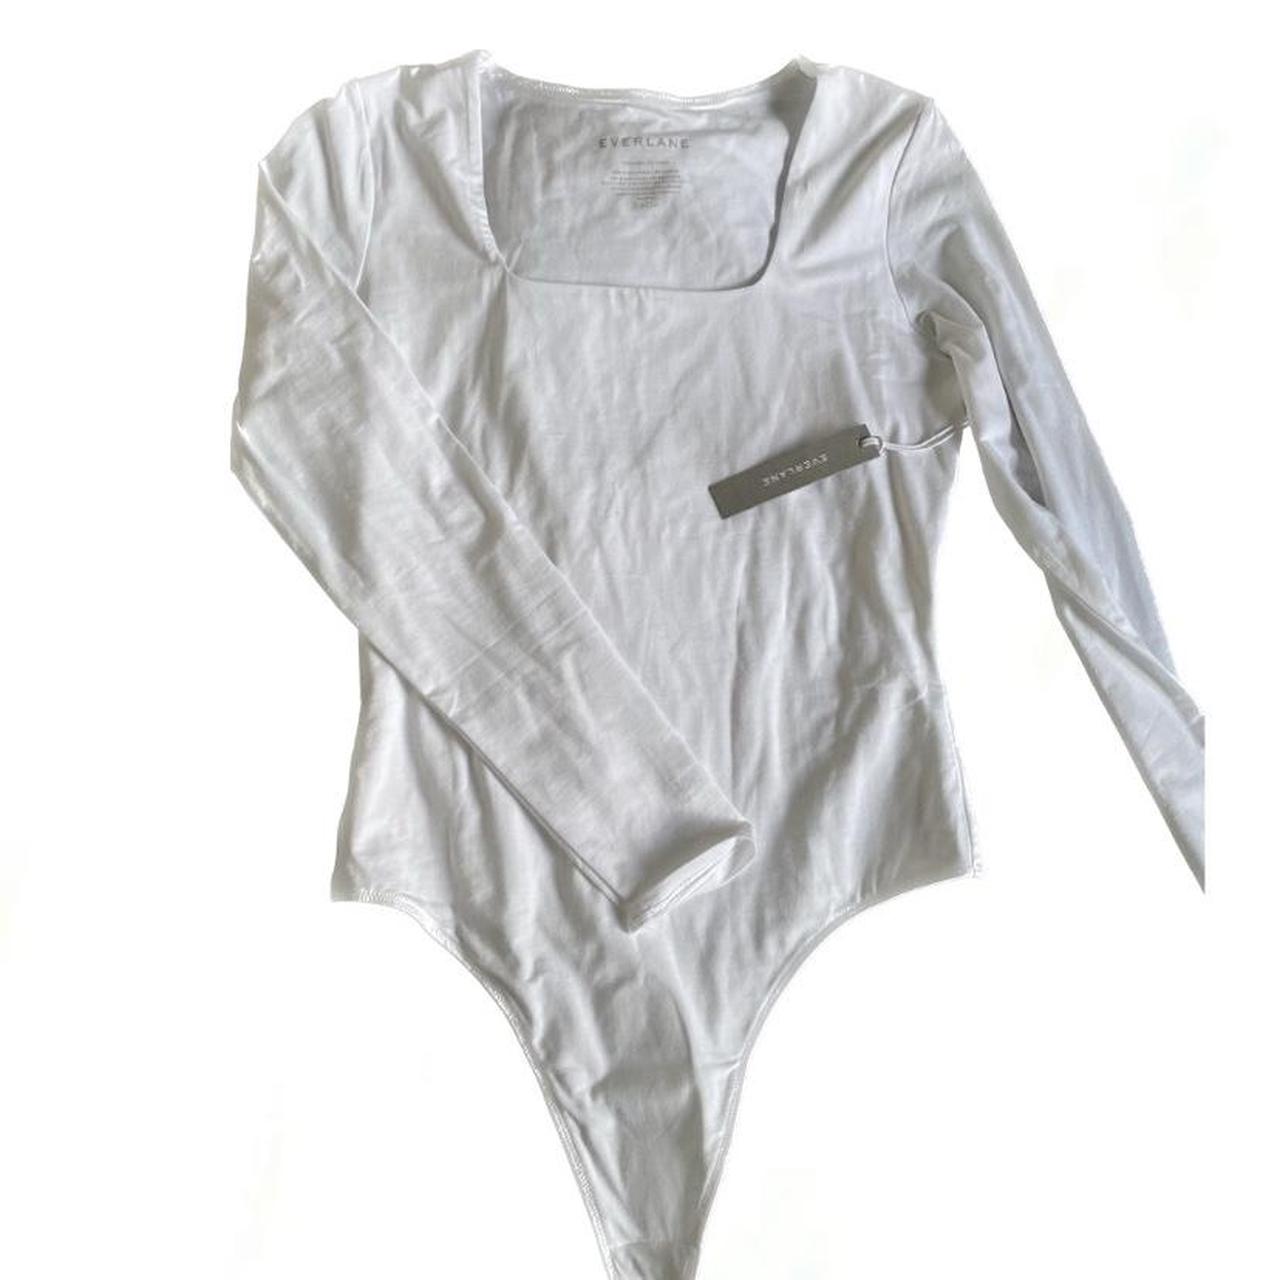 EVERLANE BODYSUIT WHITE thong leotard / bodysuit... - Depop